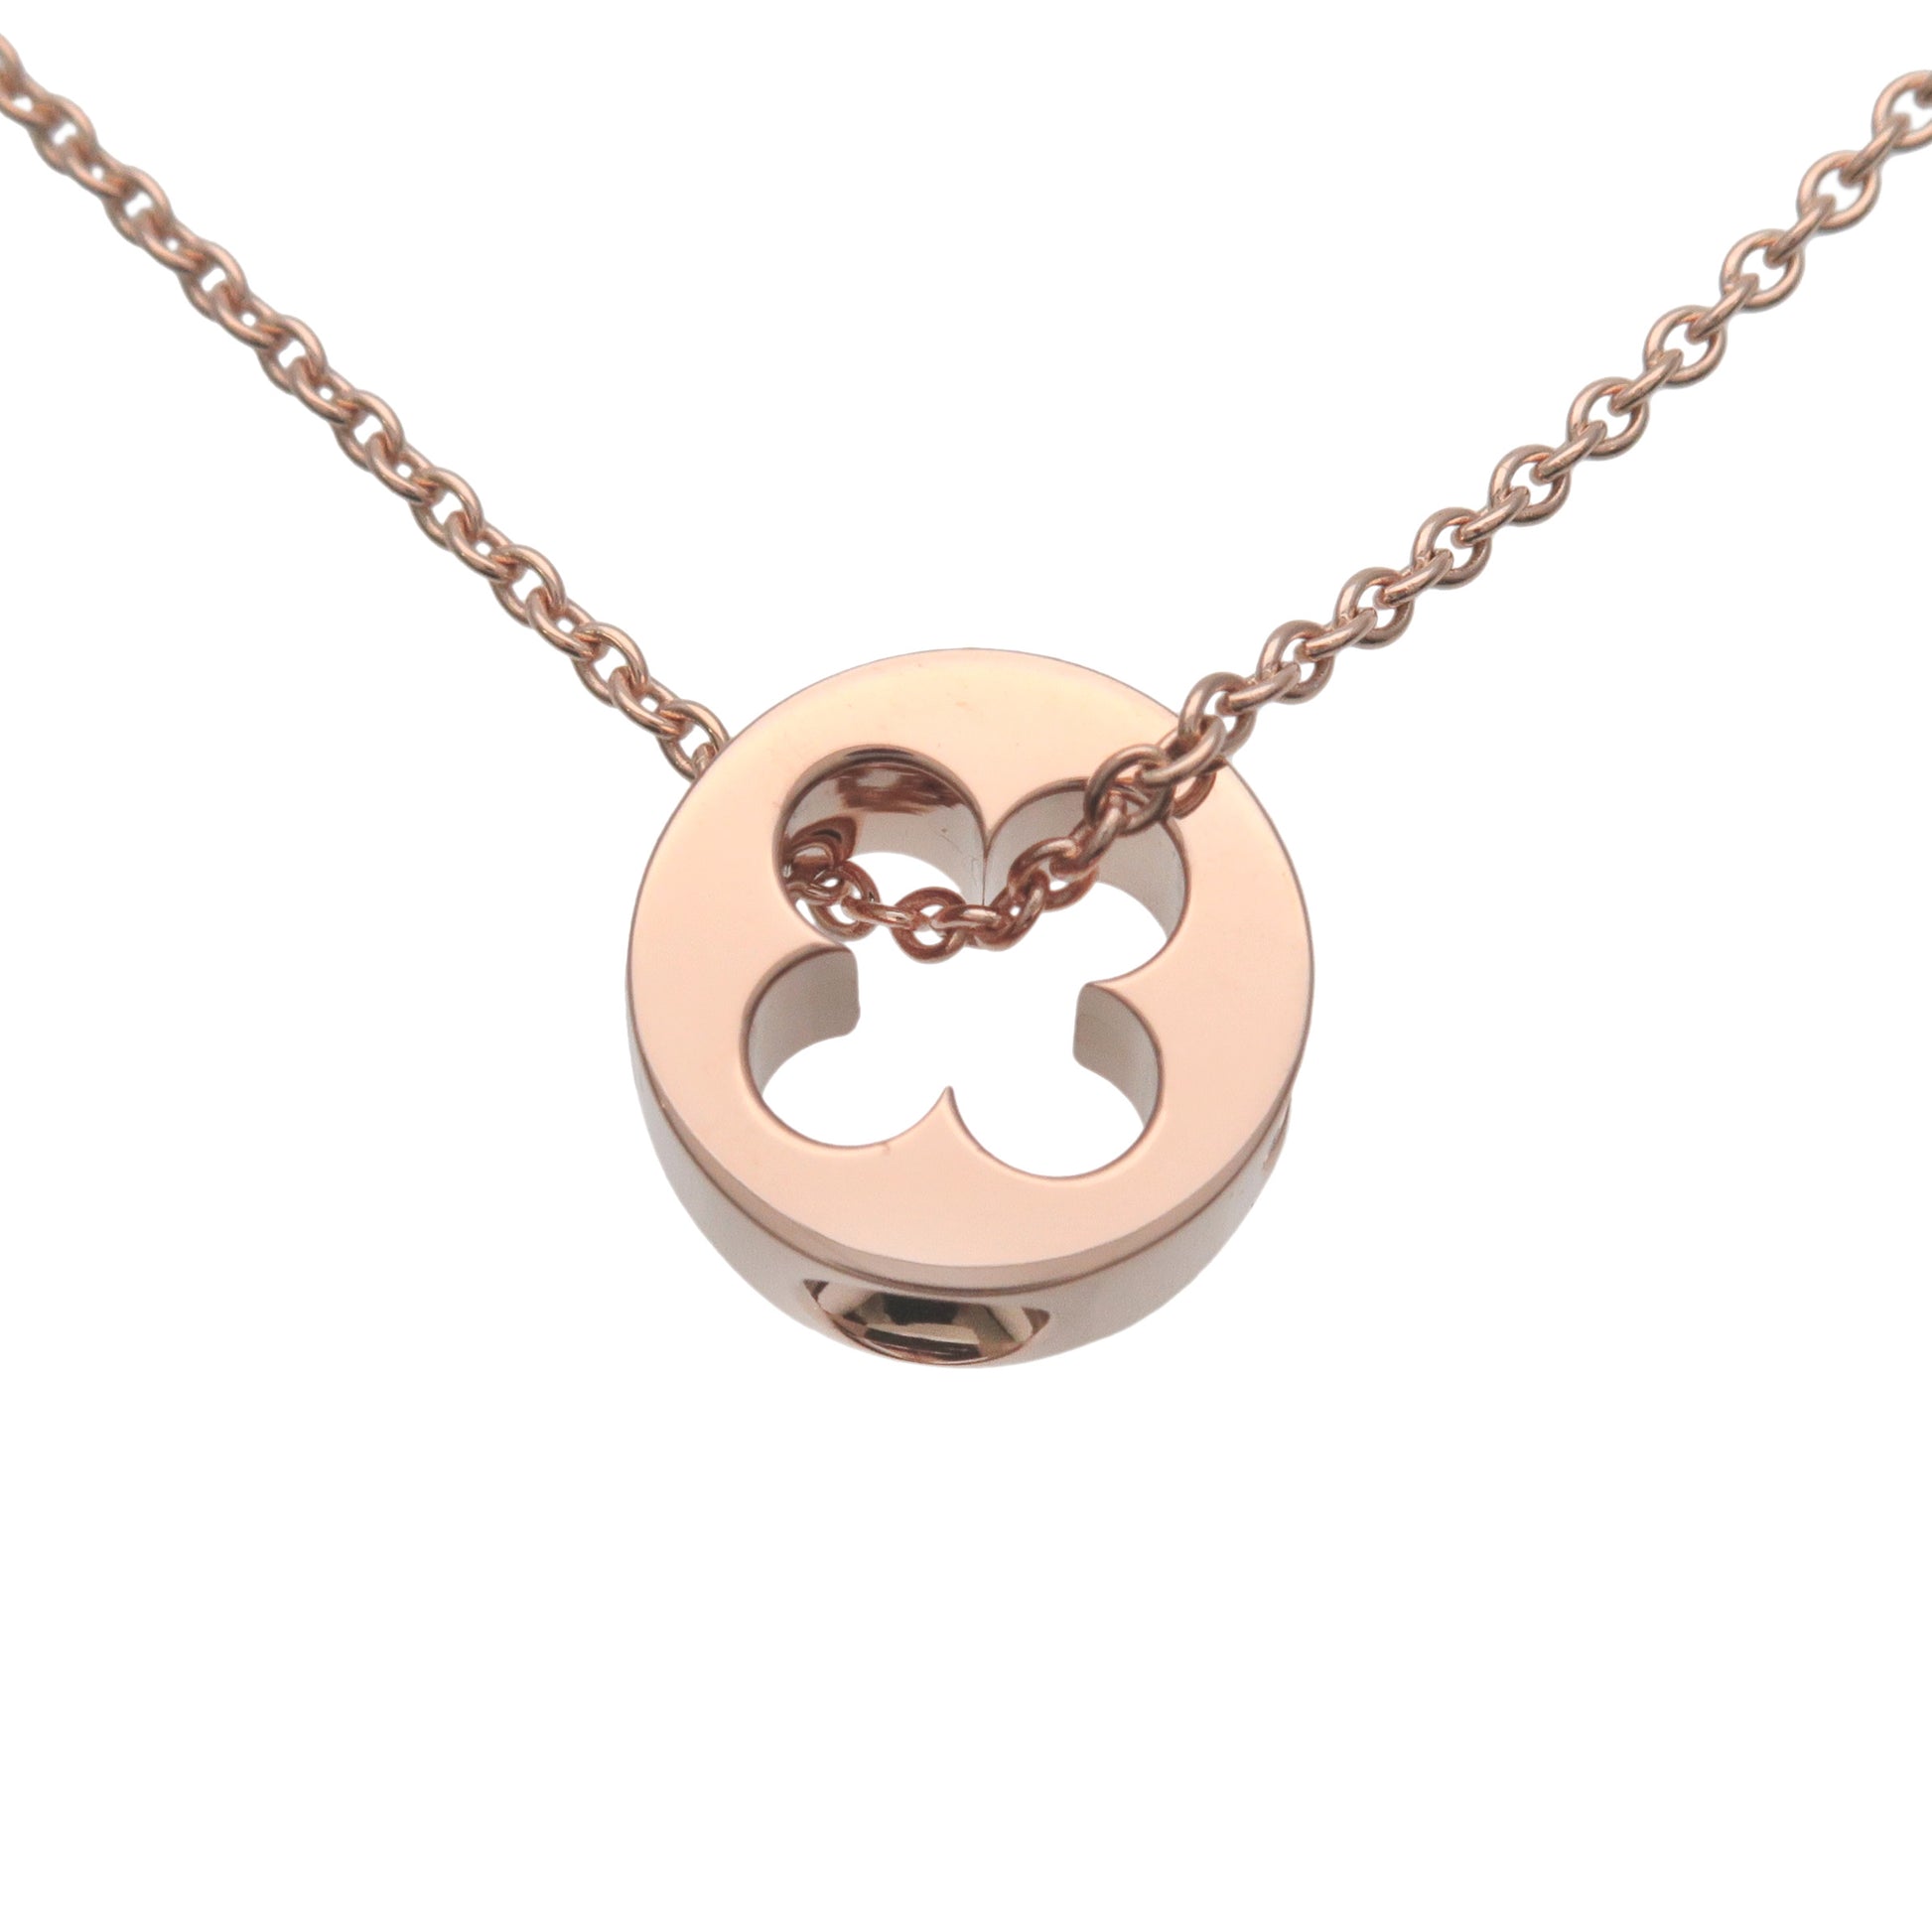 Louis Vuitton Empreinte Pendant Necklace 18k White Gold and